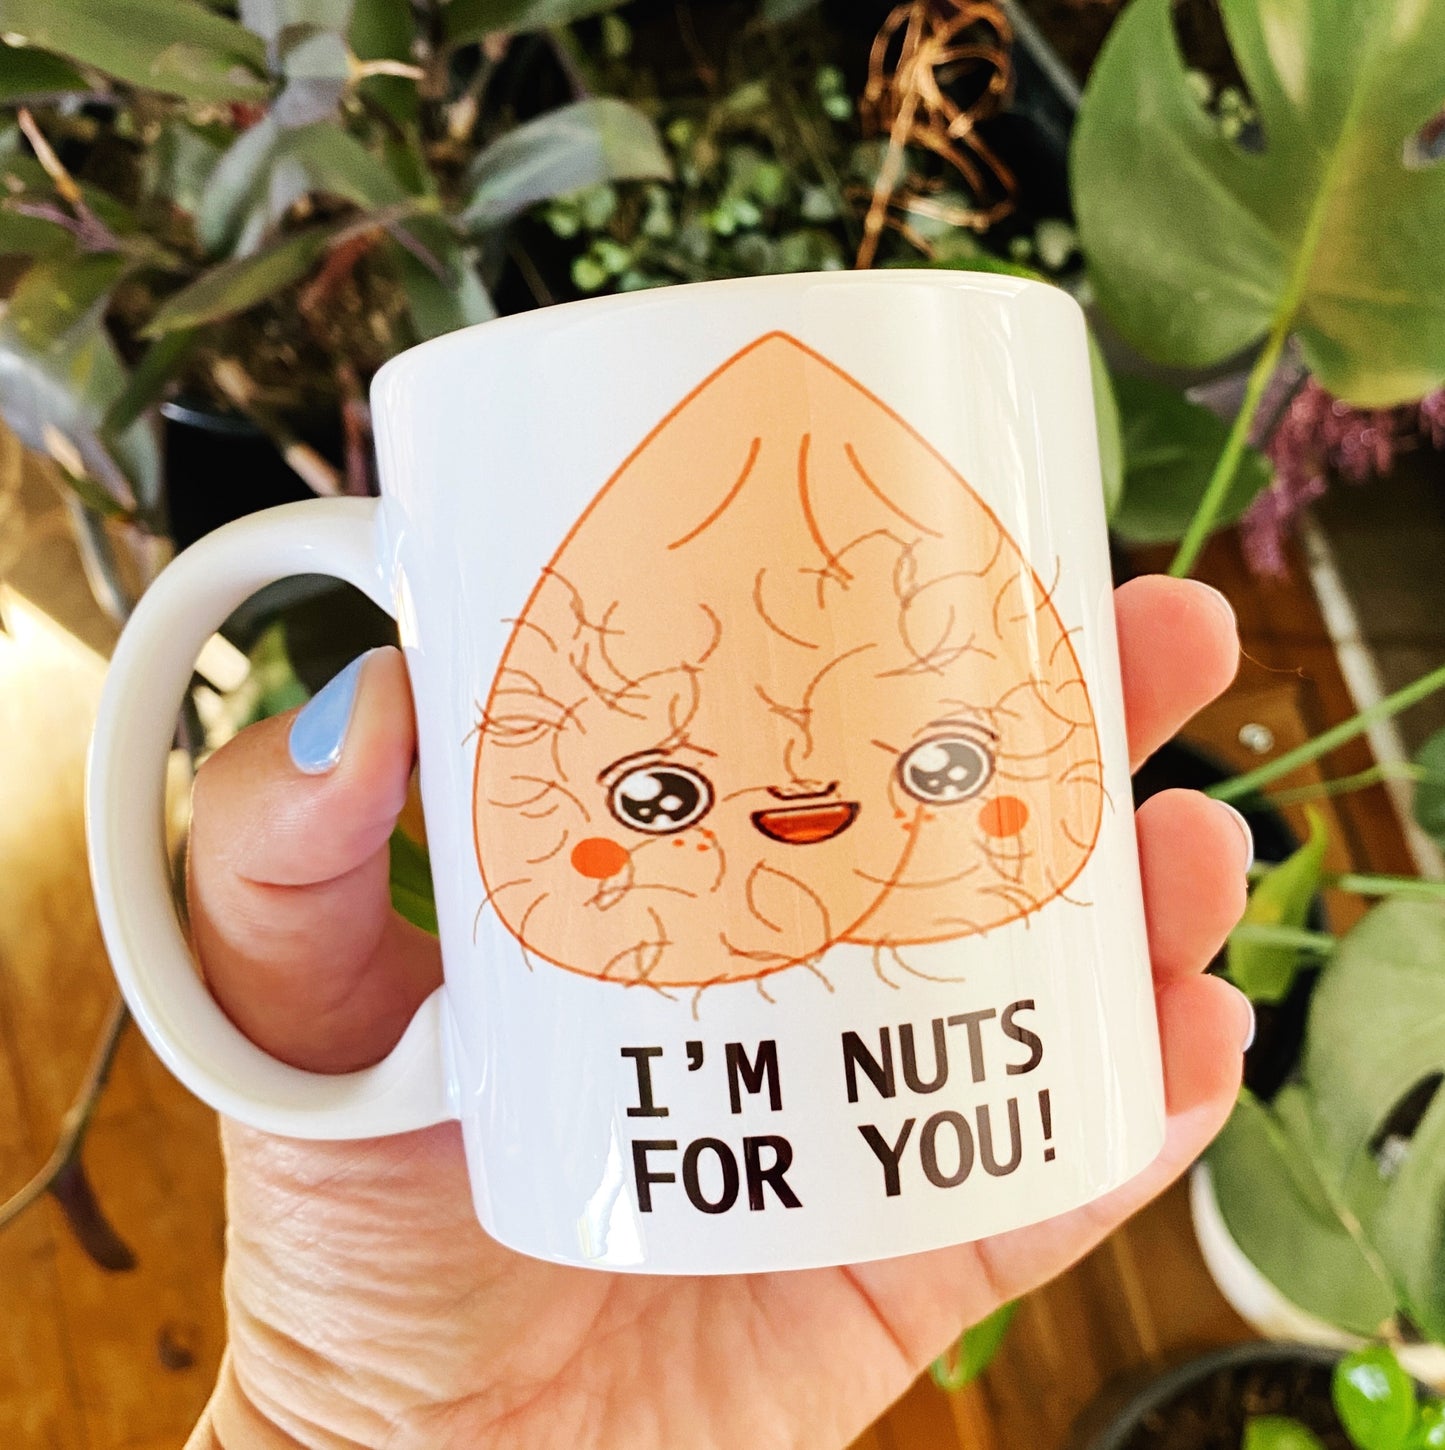 I’m nuts for you mug